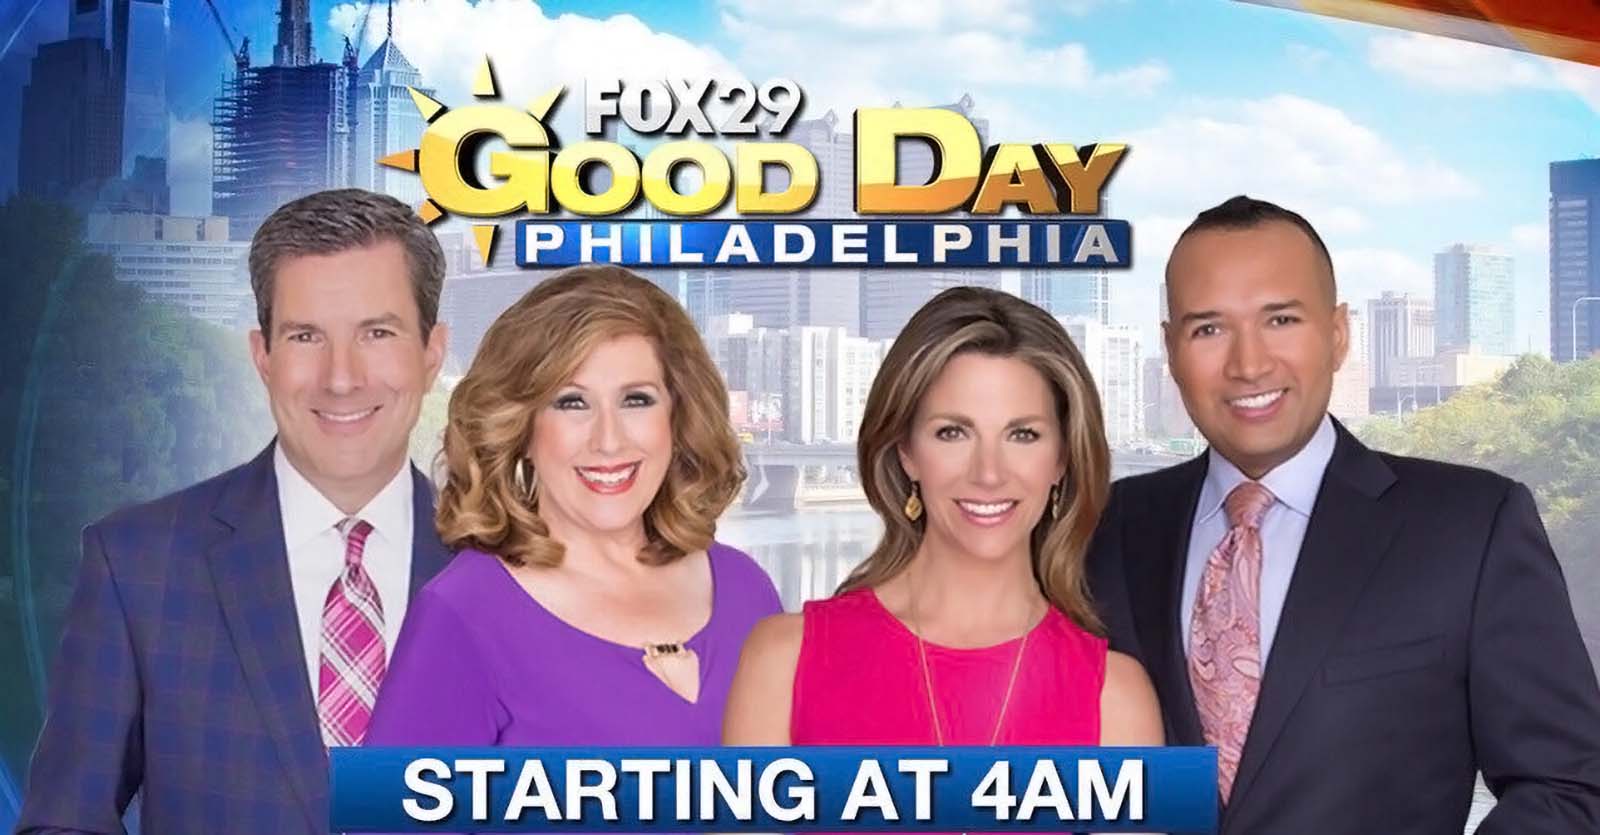 Fox 29 Good Day Philadelphia news team